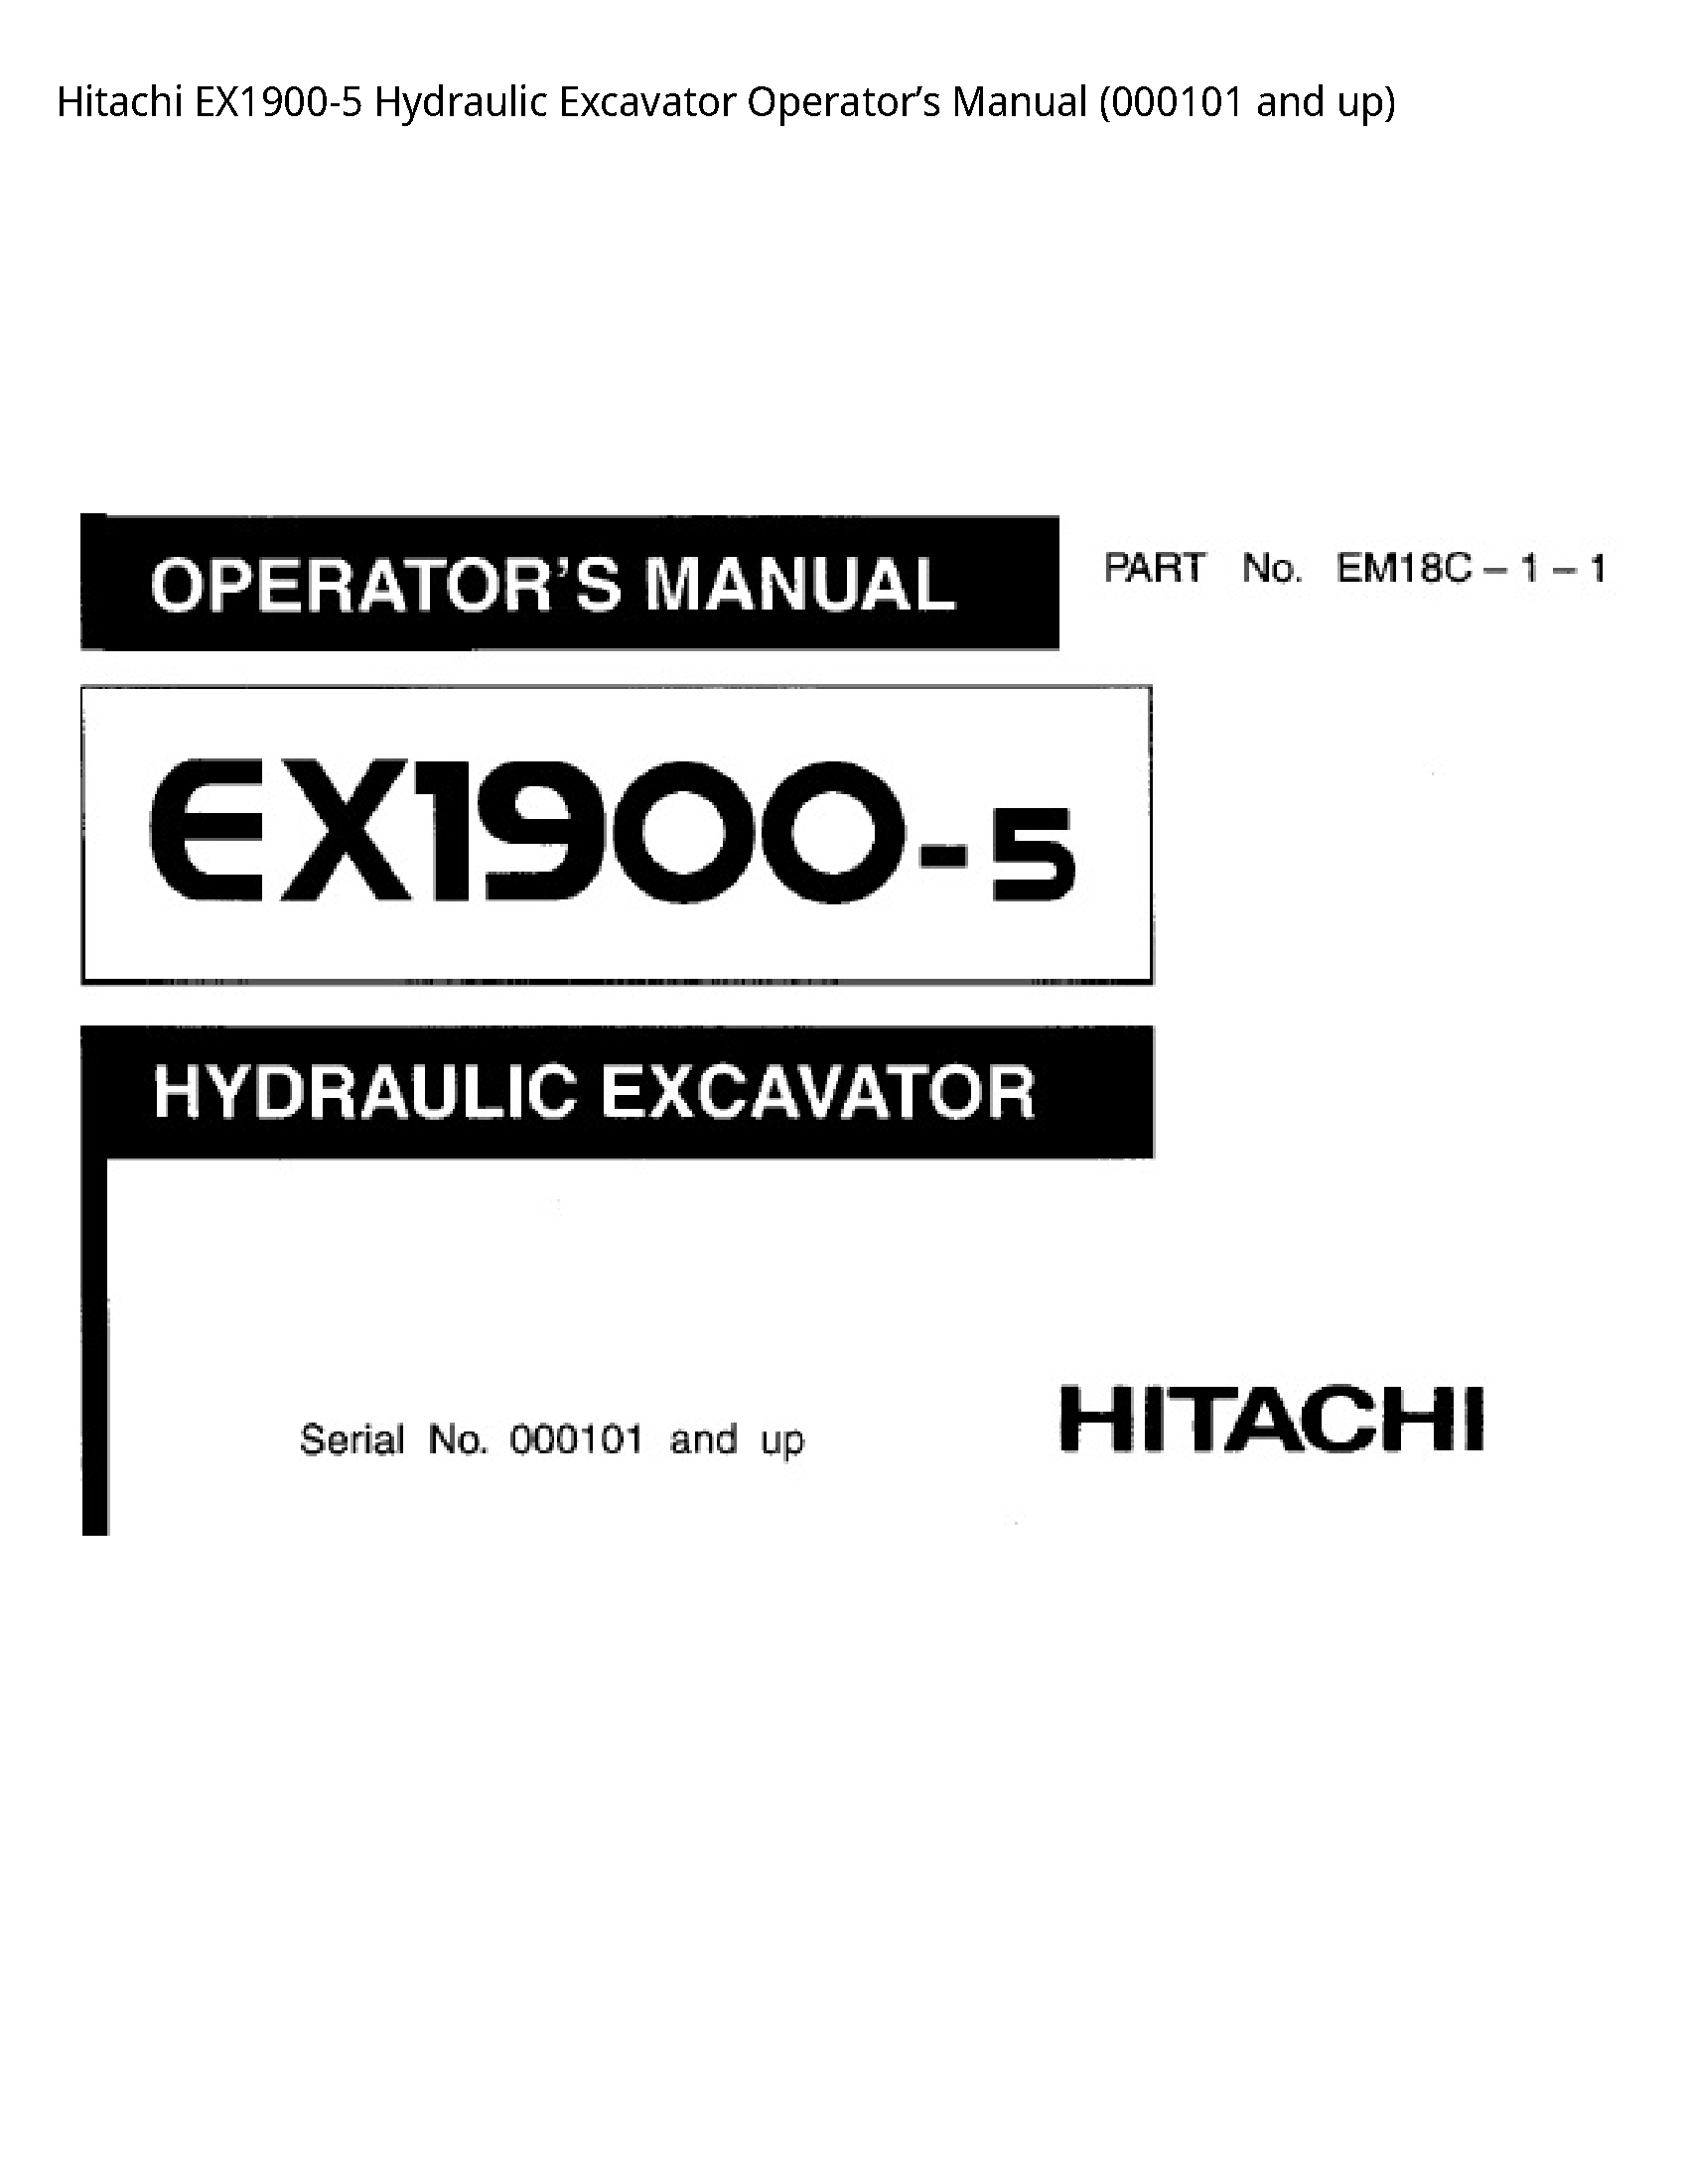 Hitachi EX1900-5 Hydraulic Excavator Operator’s manual